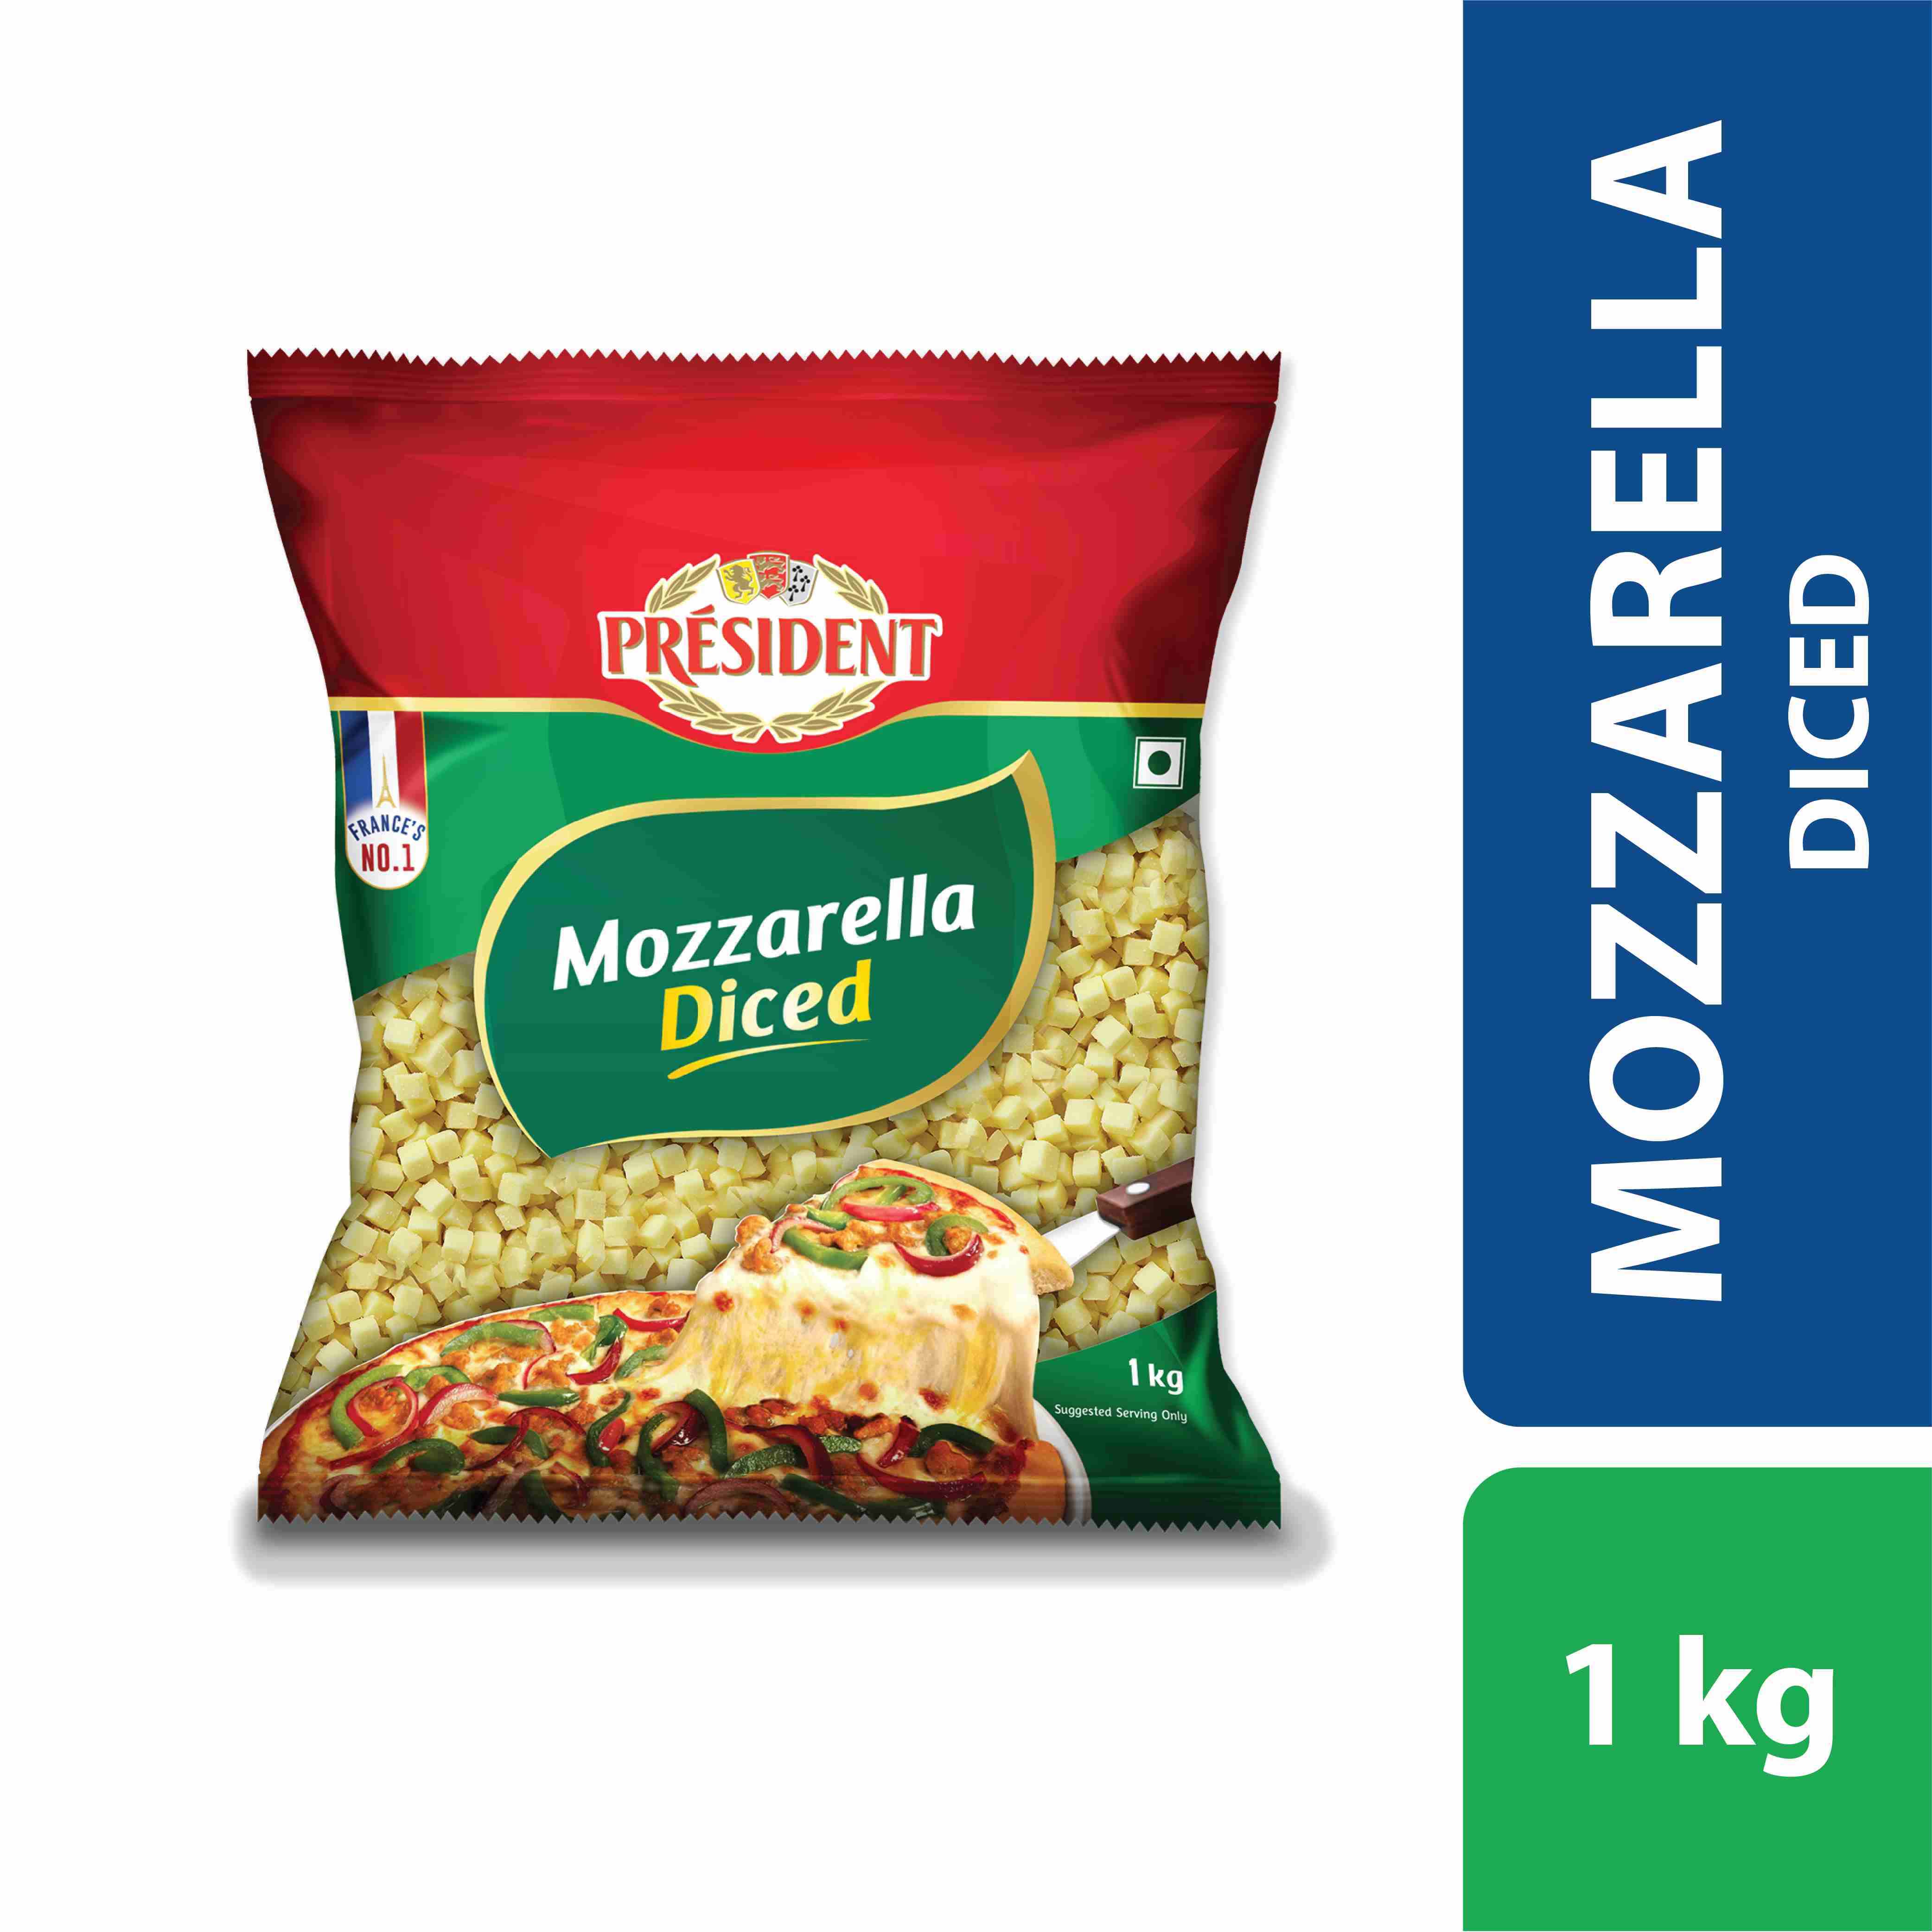 Président ® Mozzarella Diced 1kg